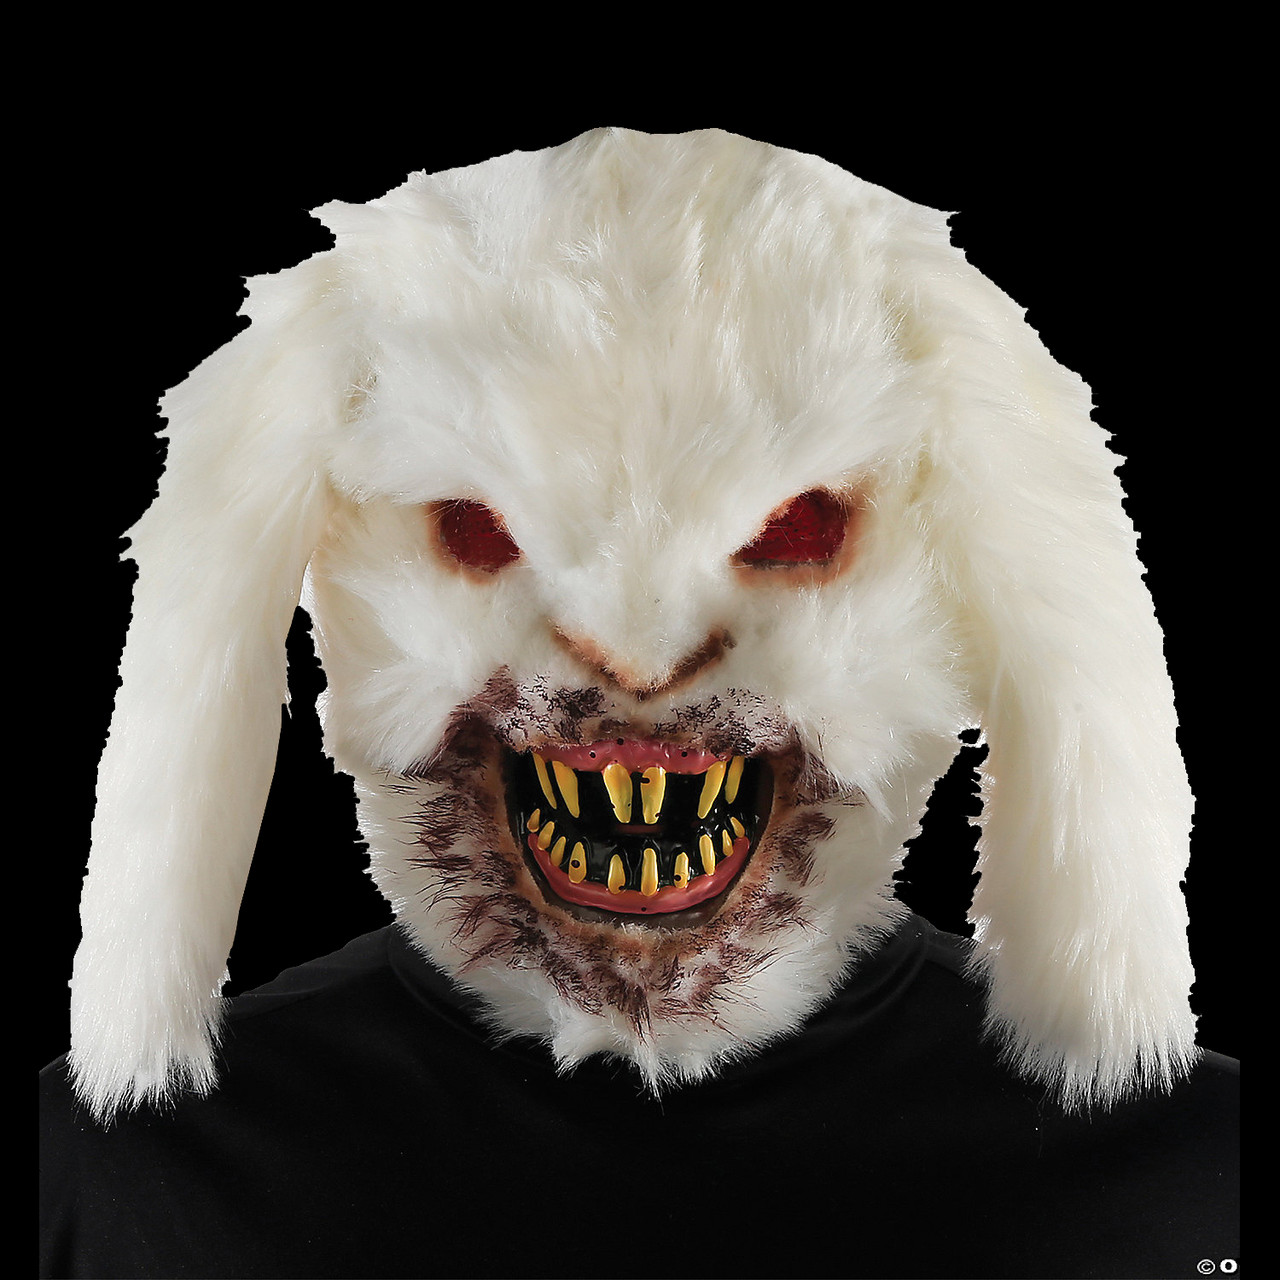 Bunny Rabid Serial Killer Gruesome Vacuum-formed Halloween Costume Mask